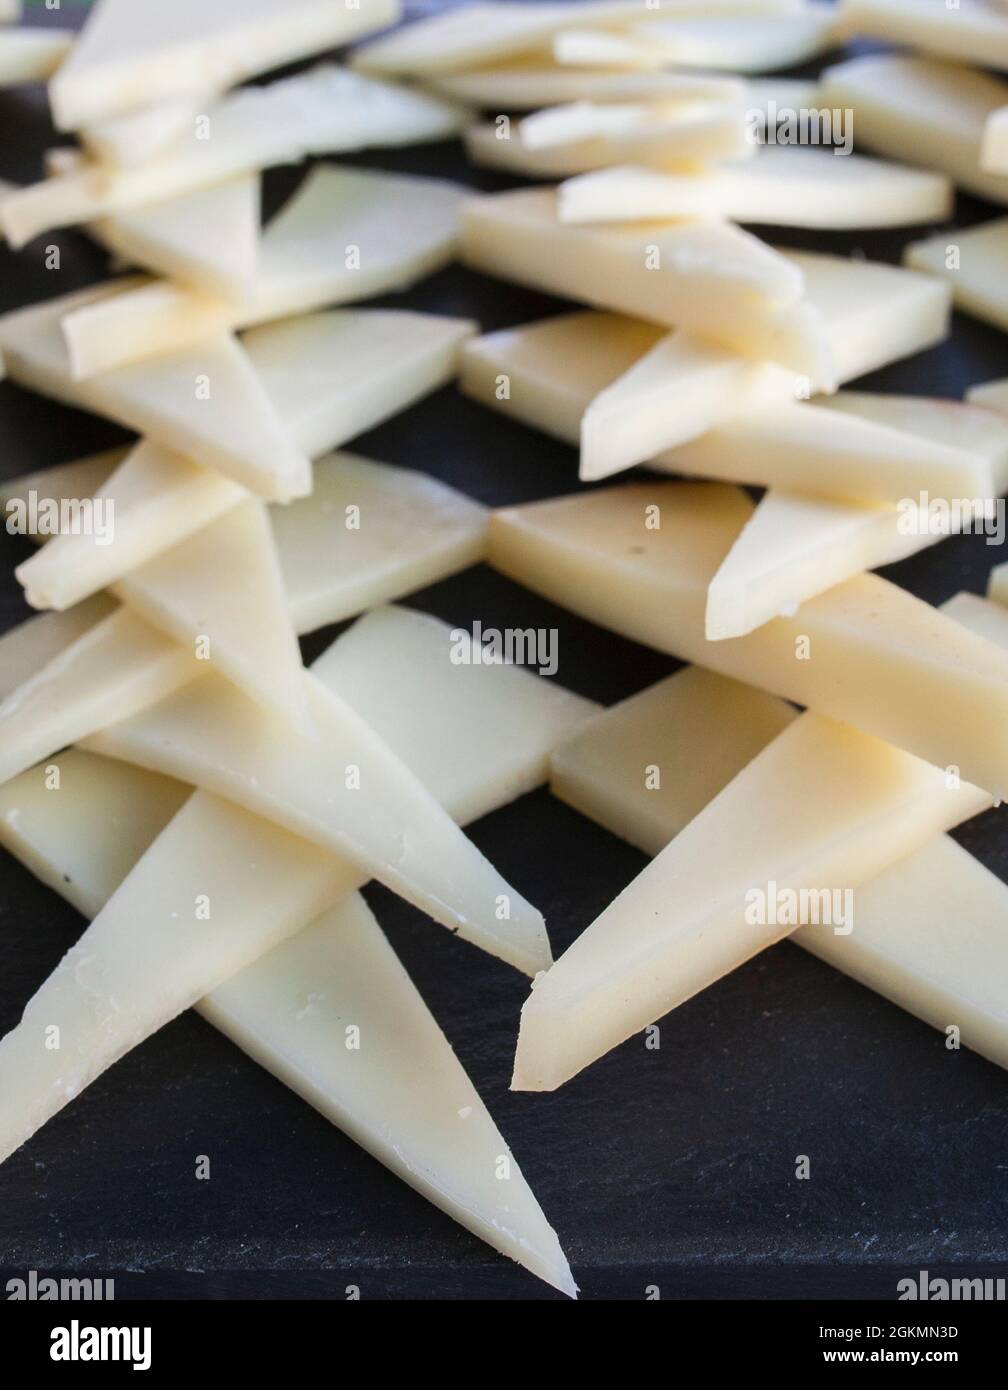 Rebanadas curadas de queso manchego sobre bandeja de pizarra negra. Primer plano Foto de stock